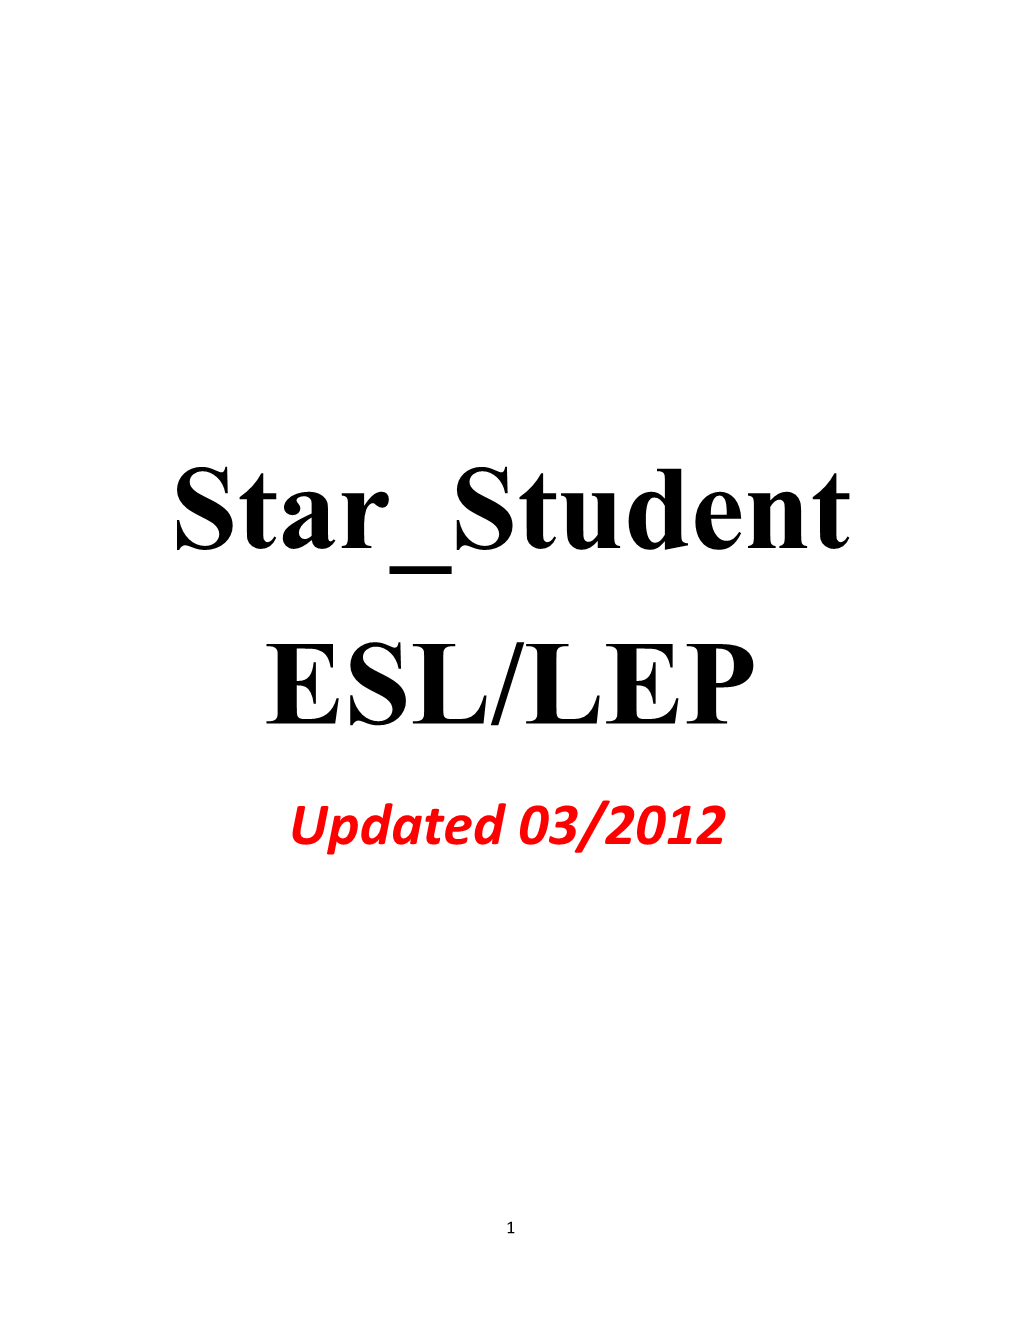 ESL/LEP and Immigrant Status Data s1